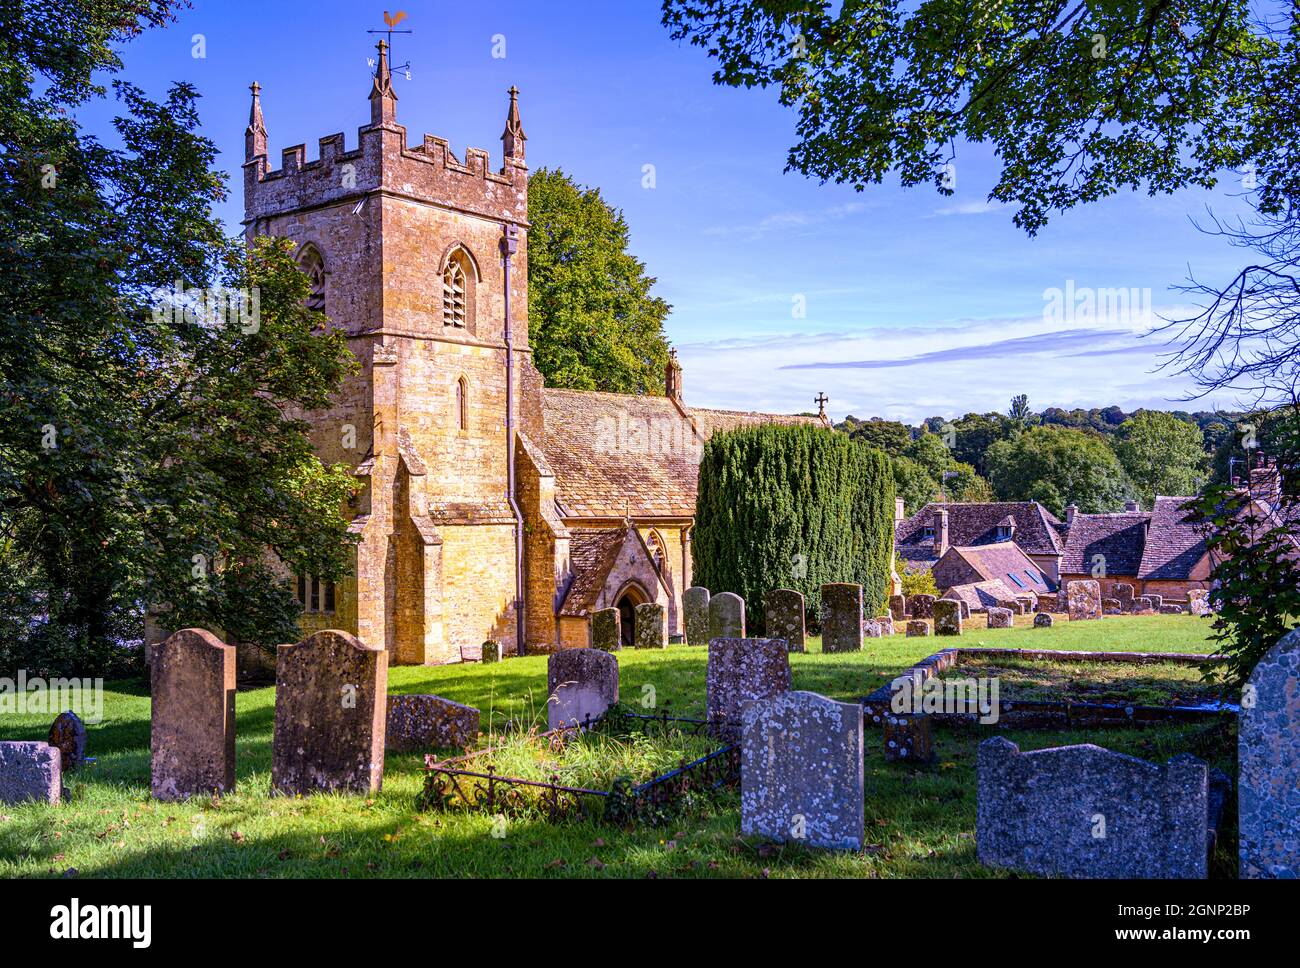 St. Perer Peters Kirche, Kirchhof und Friedhof aus dem 12. Jahrhundert im hübschen cotswold cotswolds-Dorf Upper Slaughter Gloucestershire Englan Stockfoto